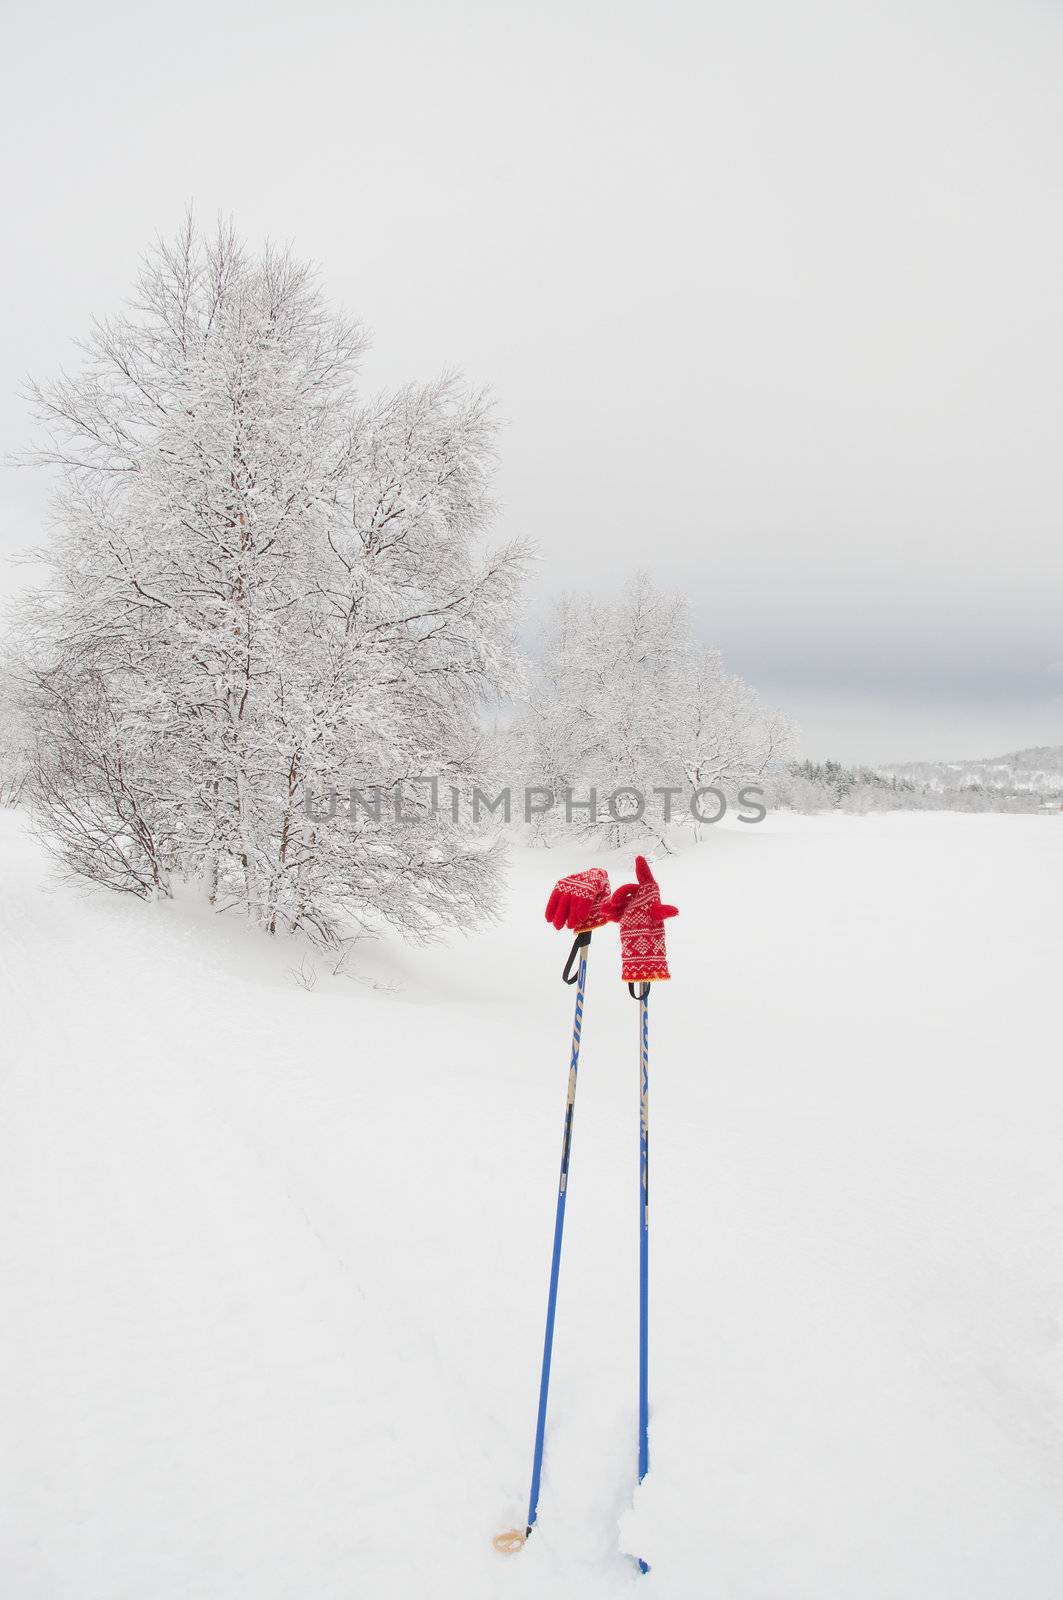 Poles and red gloves in winterwonderland